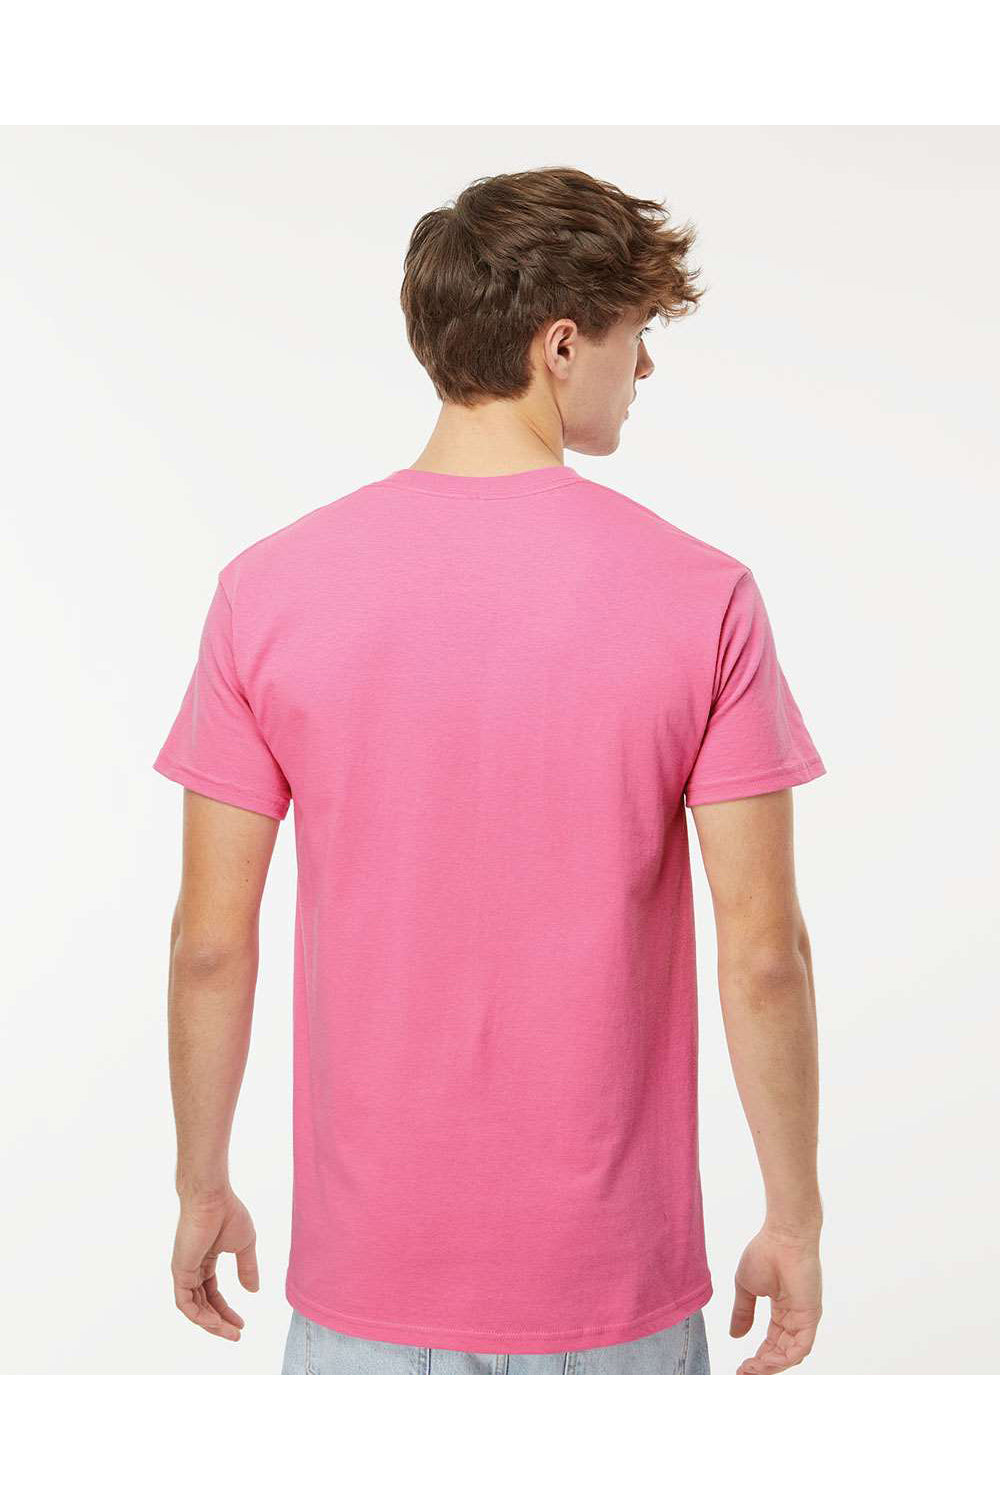 M&O 4800 Mens Gold Soft Touch Short Sleeve Crewneck T-Shirt Azalea Pink Model Back